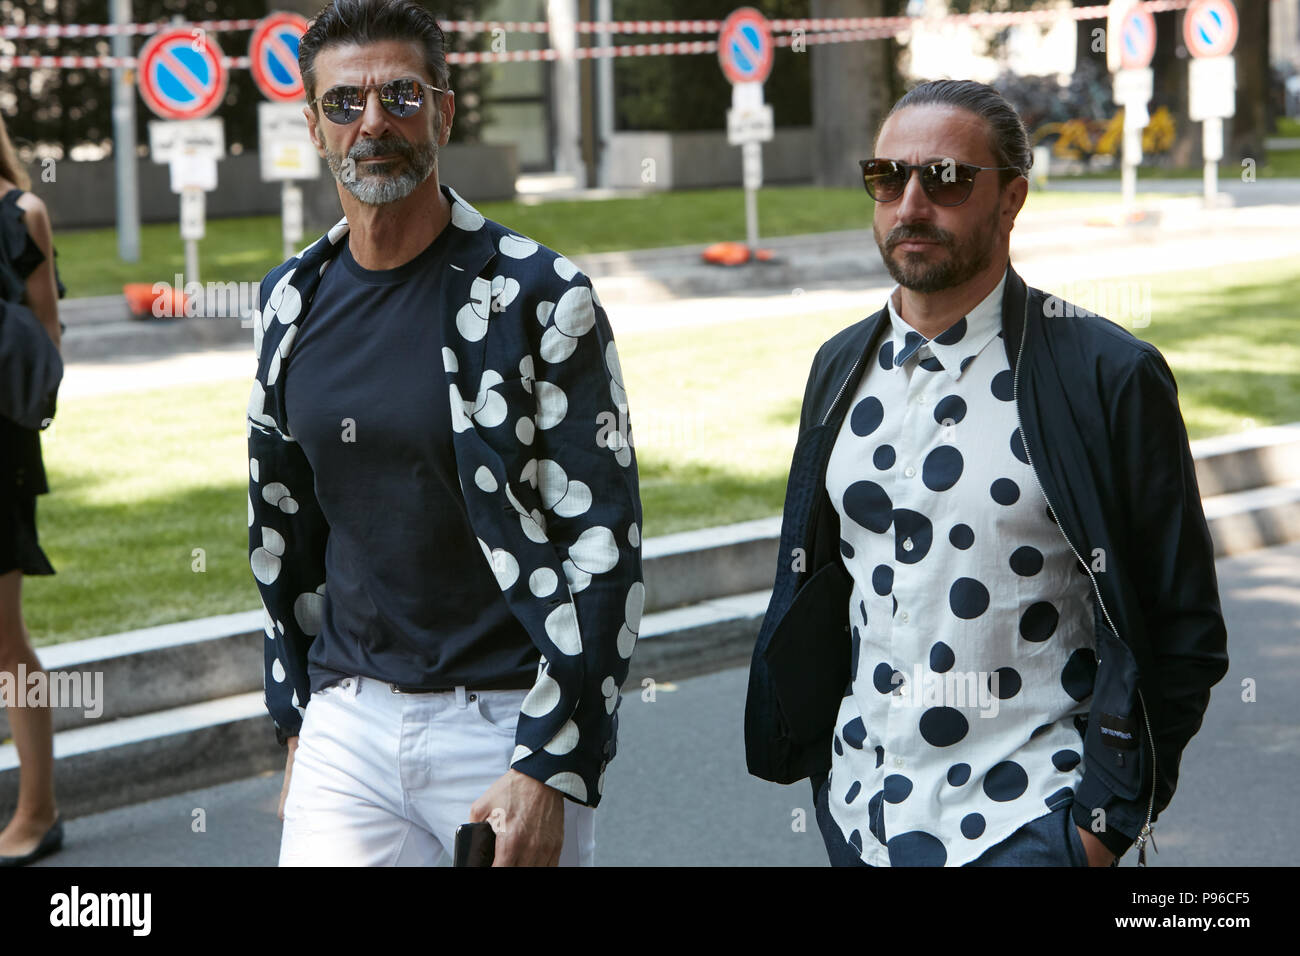 MILAN - JUNE 18: Men with blue and white polka dot jacket and shirt before Giorgio Armani fashion show, Milan Fashion Week street style on June 18, 20 Stock Photo